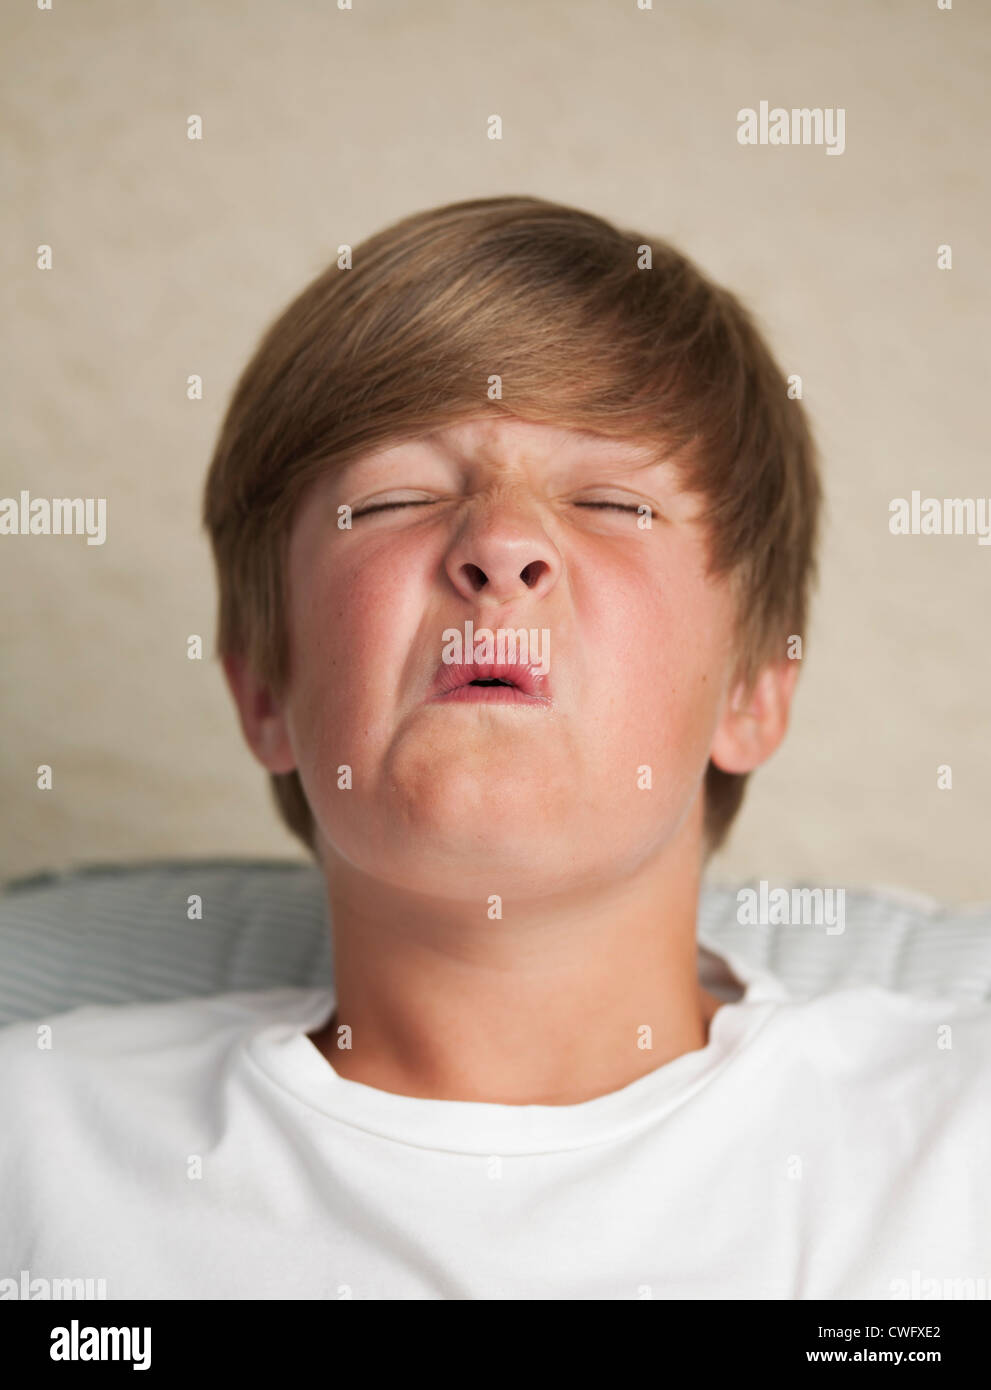 Boy pulling face Stock Photo